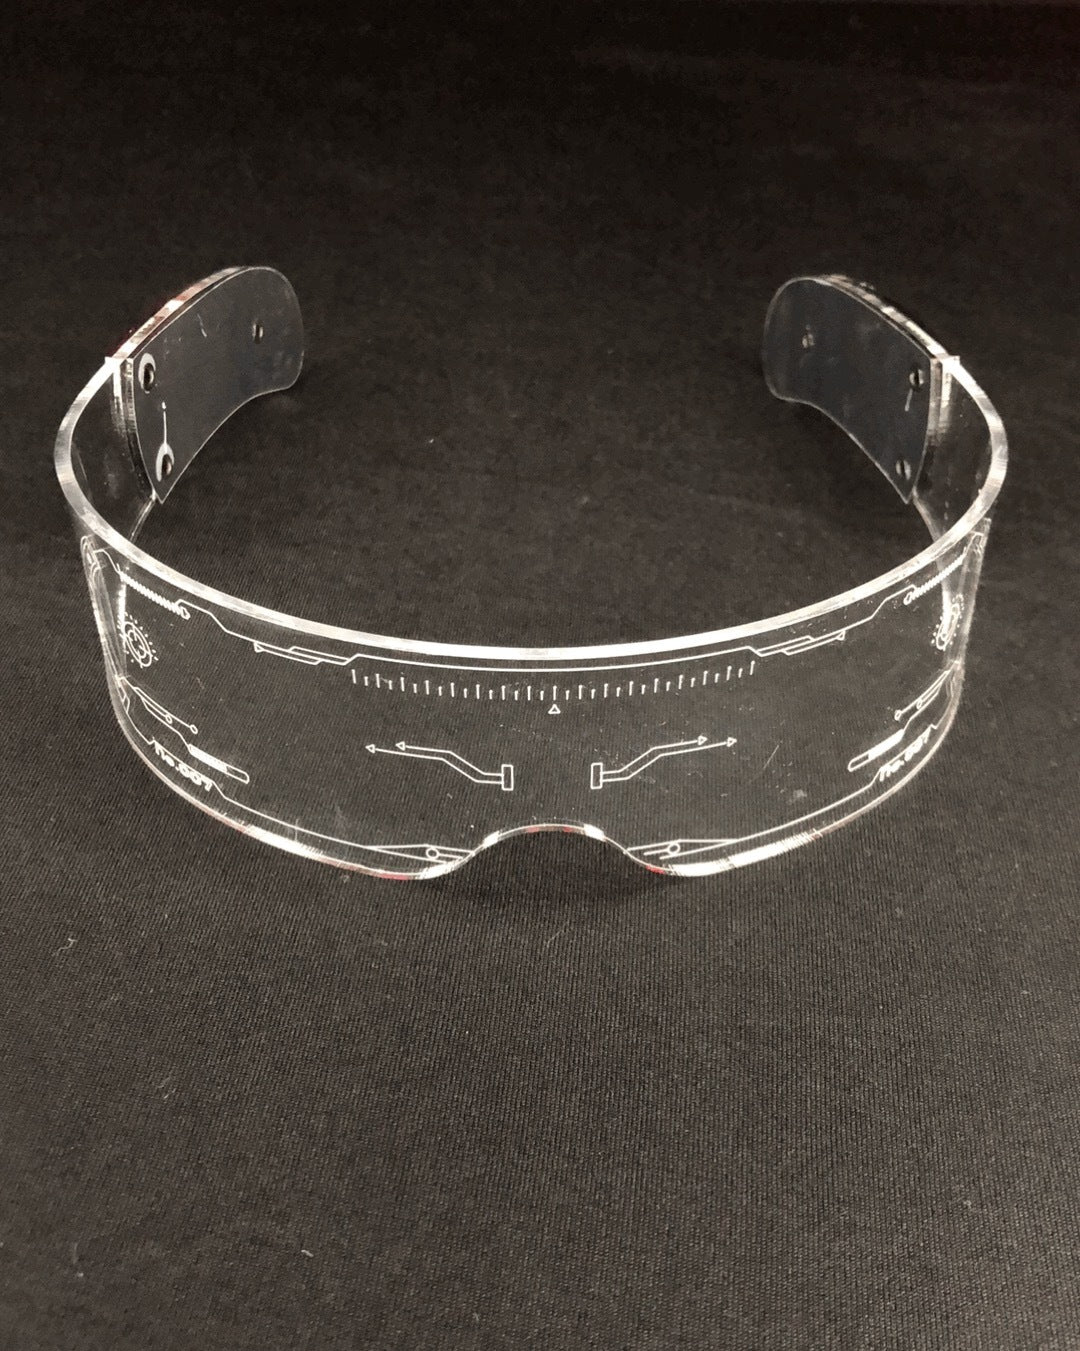 8-Bit LED Glasses – Rave Wonderland